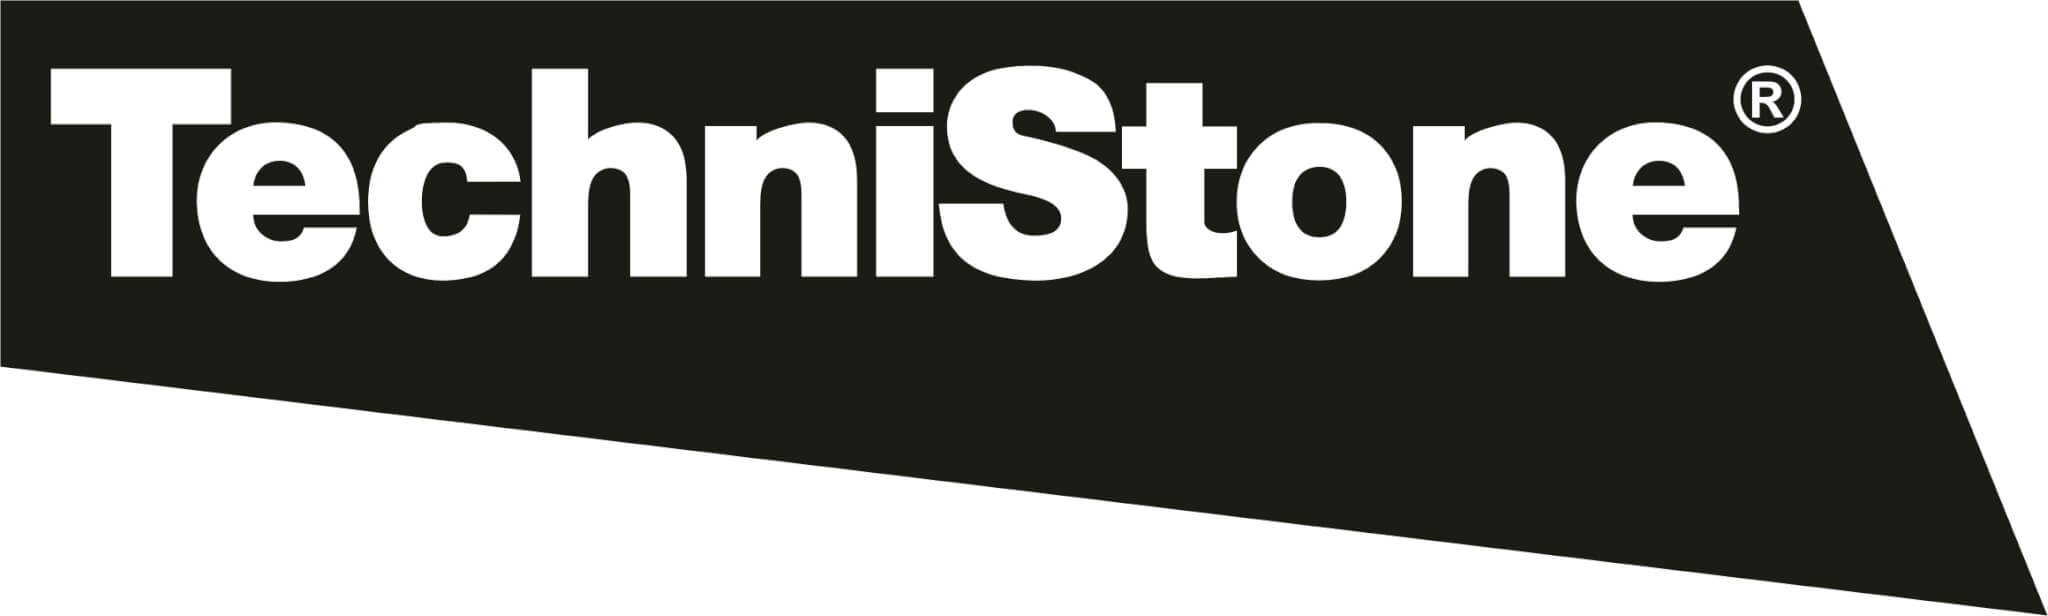 technistone-logo.jpg